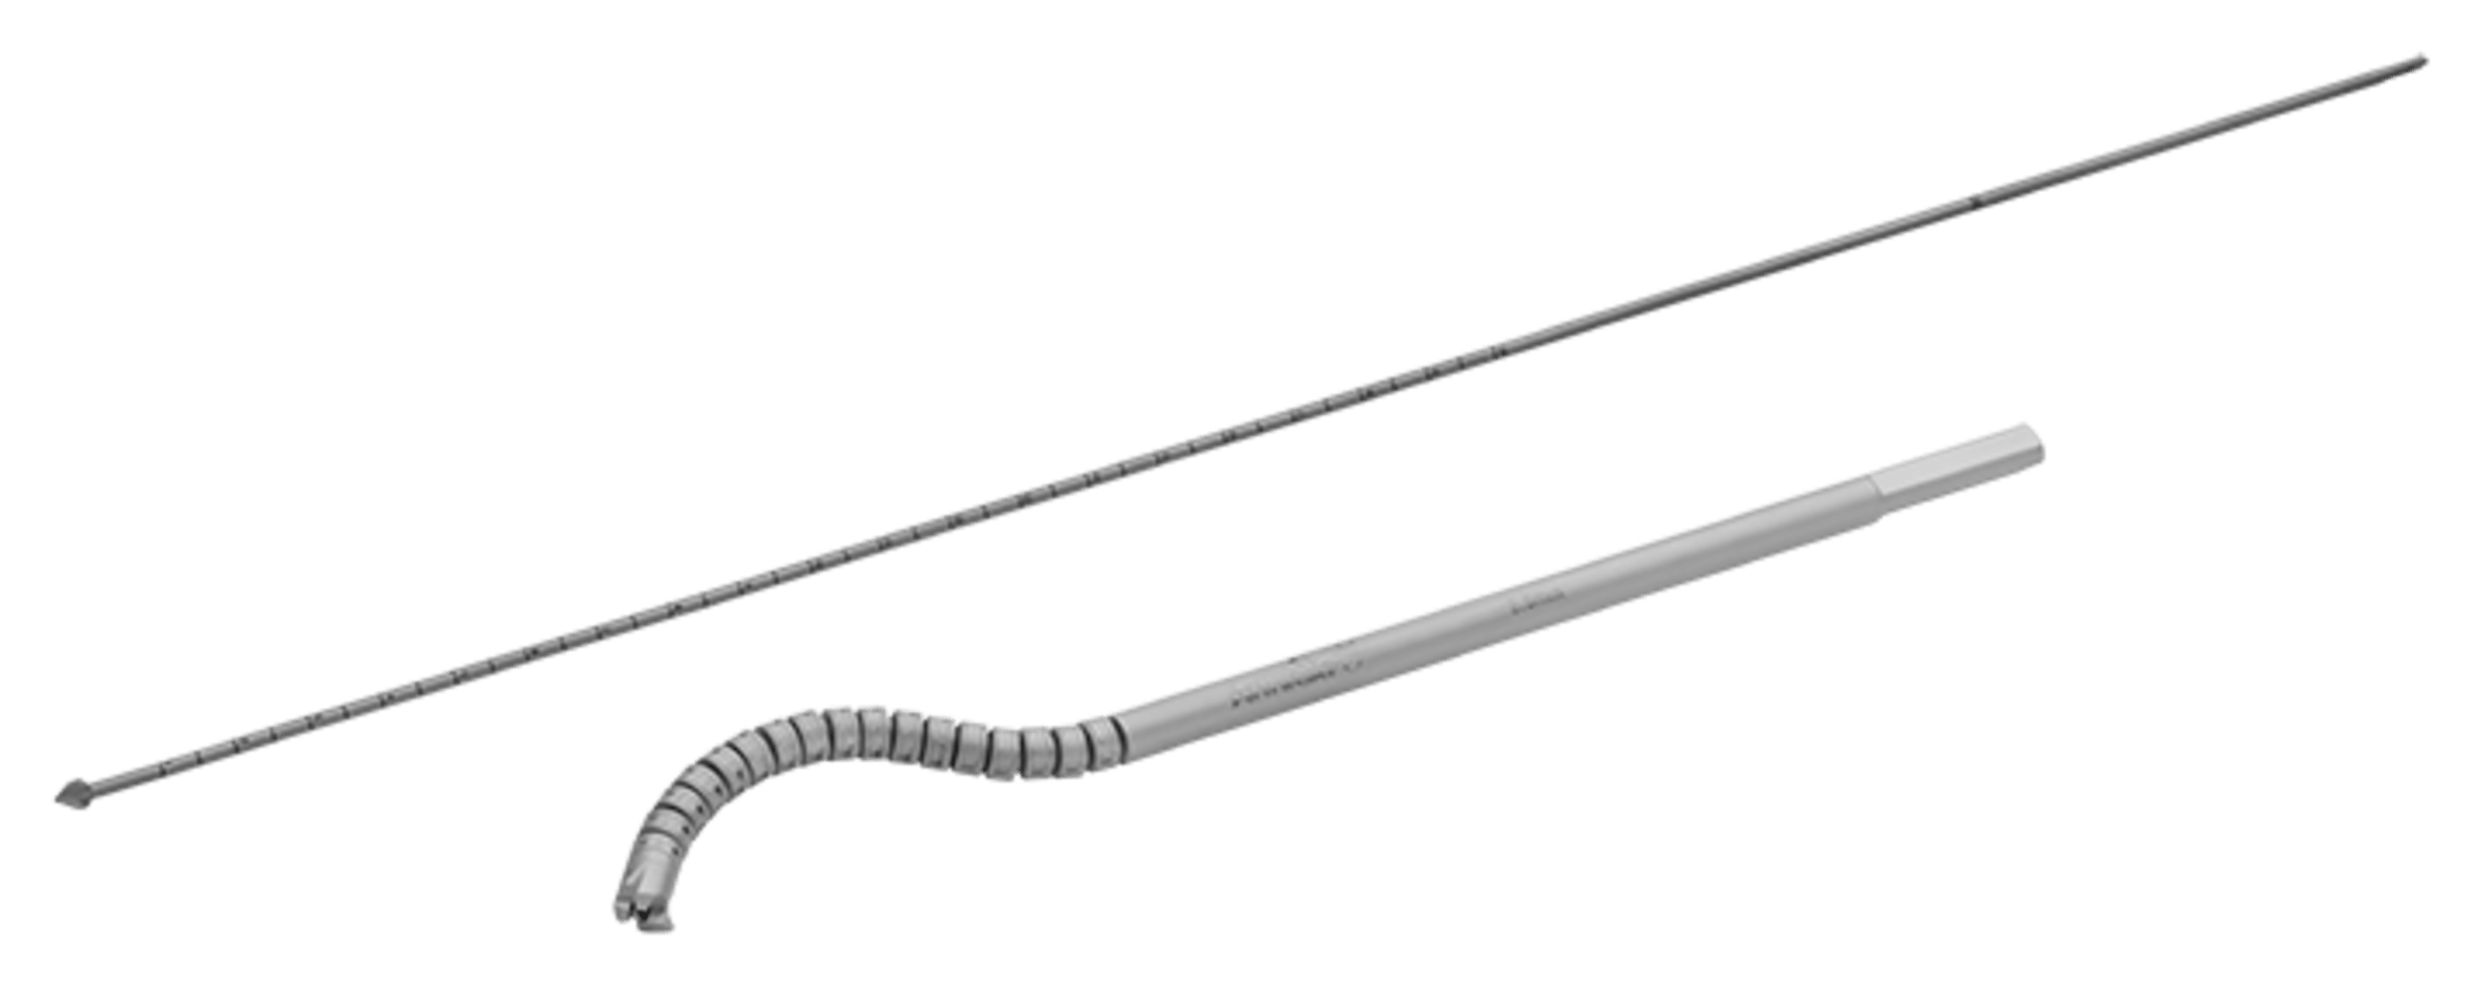 Arthrex Flexible Reamer with Flexible TightRope Drill Pin, 9.5 mm